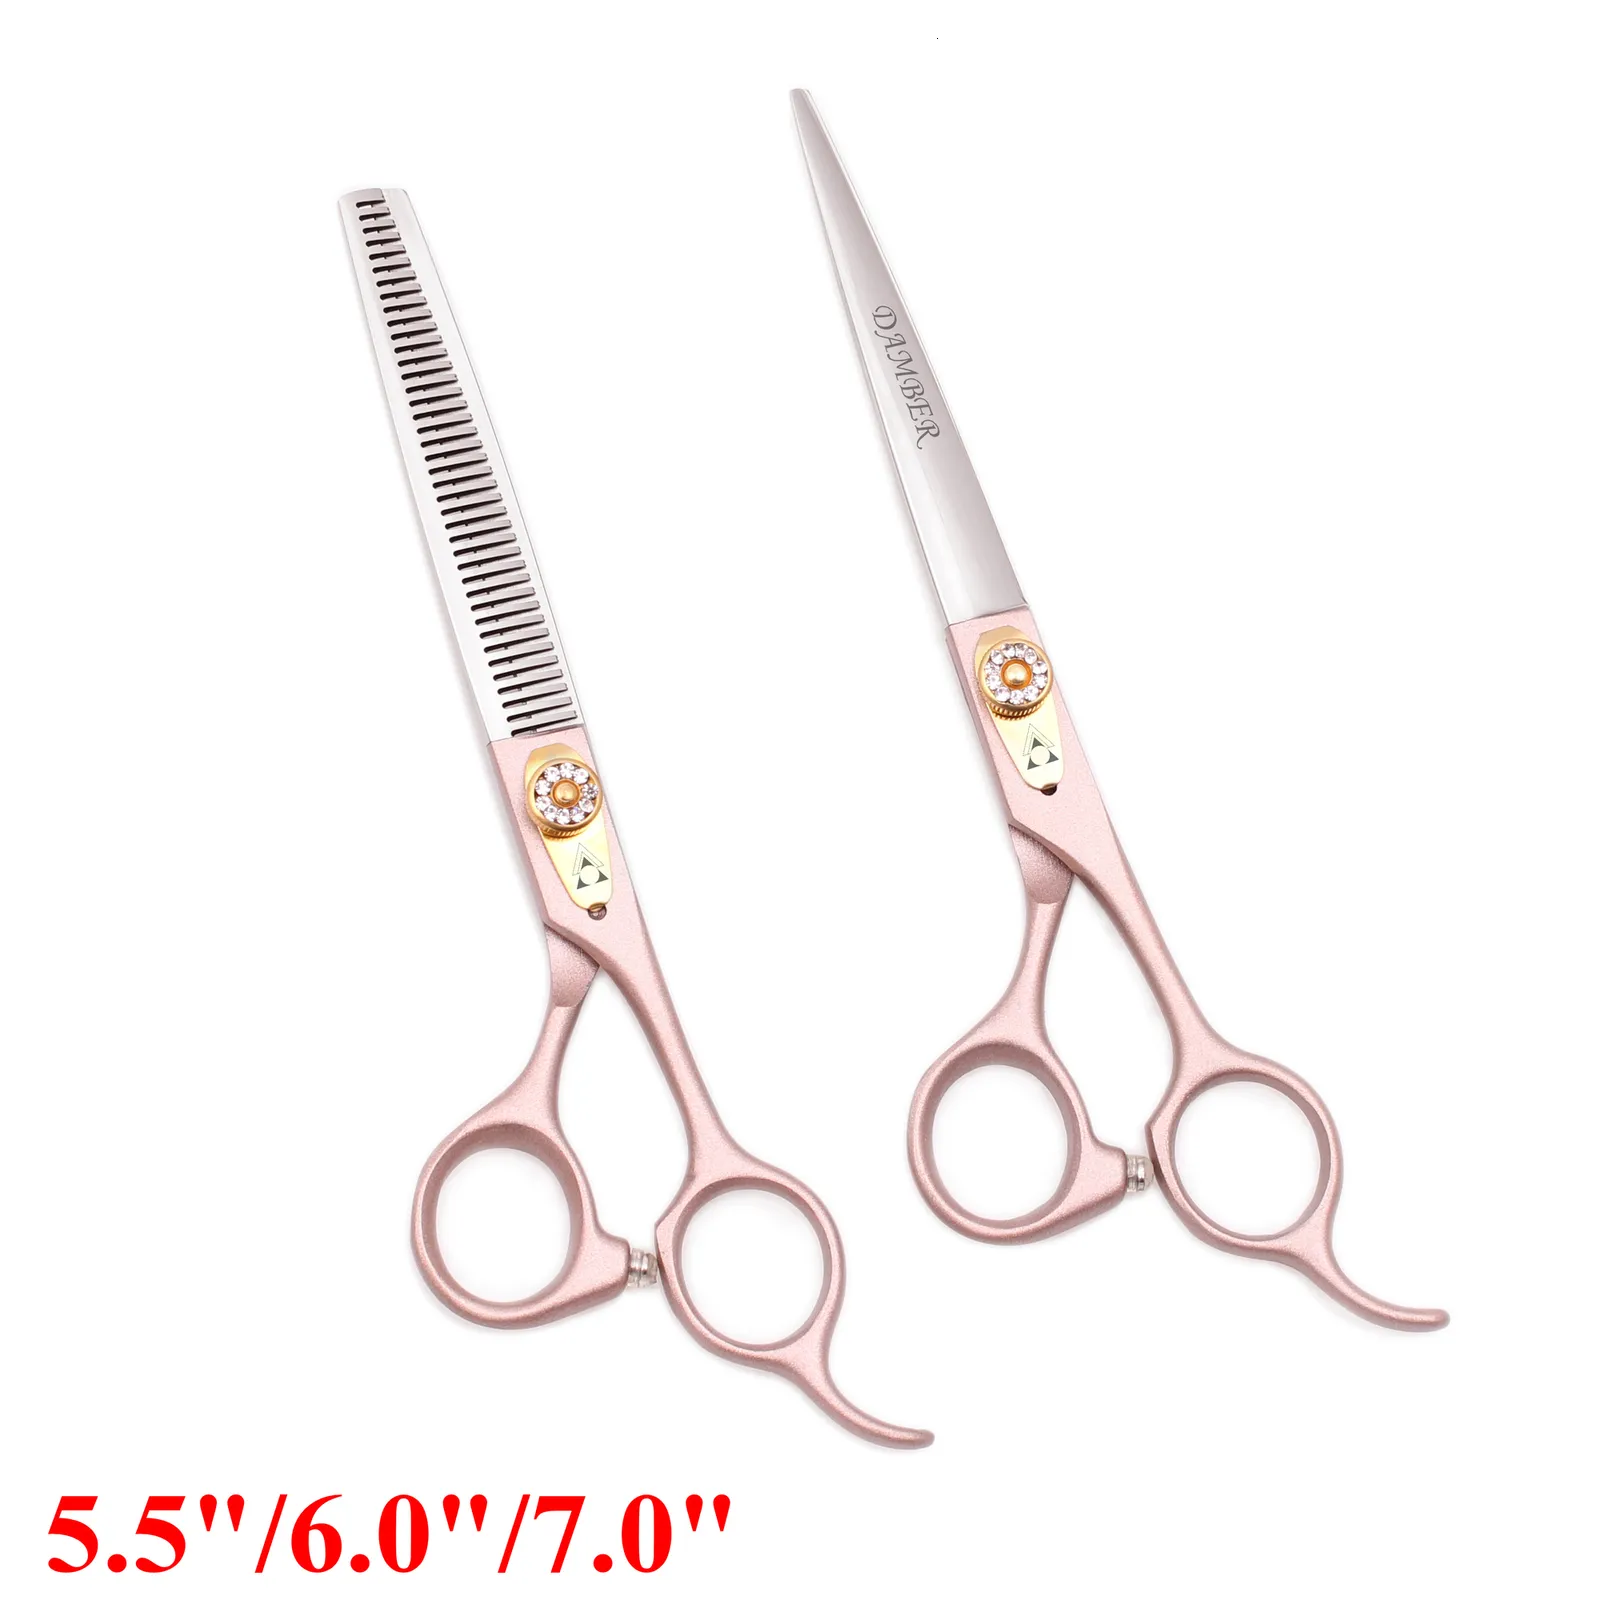 Tesoura de cabelo 5.5 6 7 Japan Steel Professional Hairdressing Scissors Hairs Rainning Barber Scissors Definir tesouras de corte de cabelo 440C Tesoura 9105# 230508